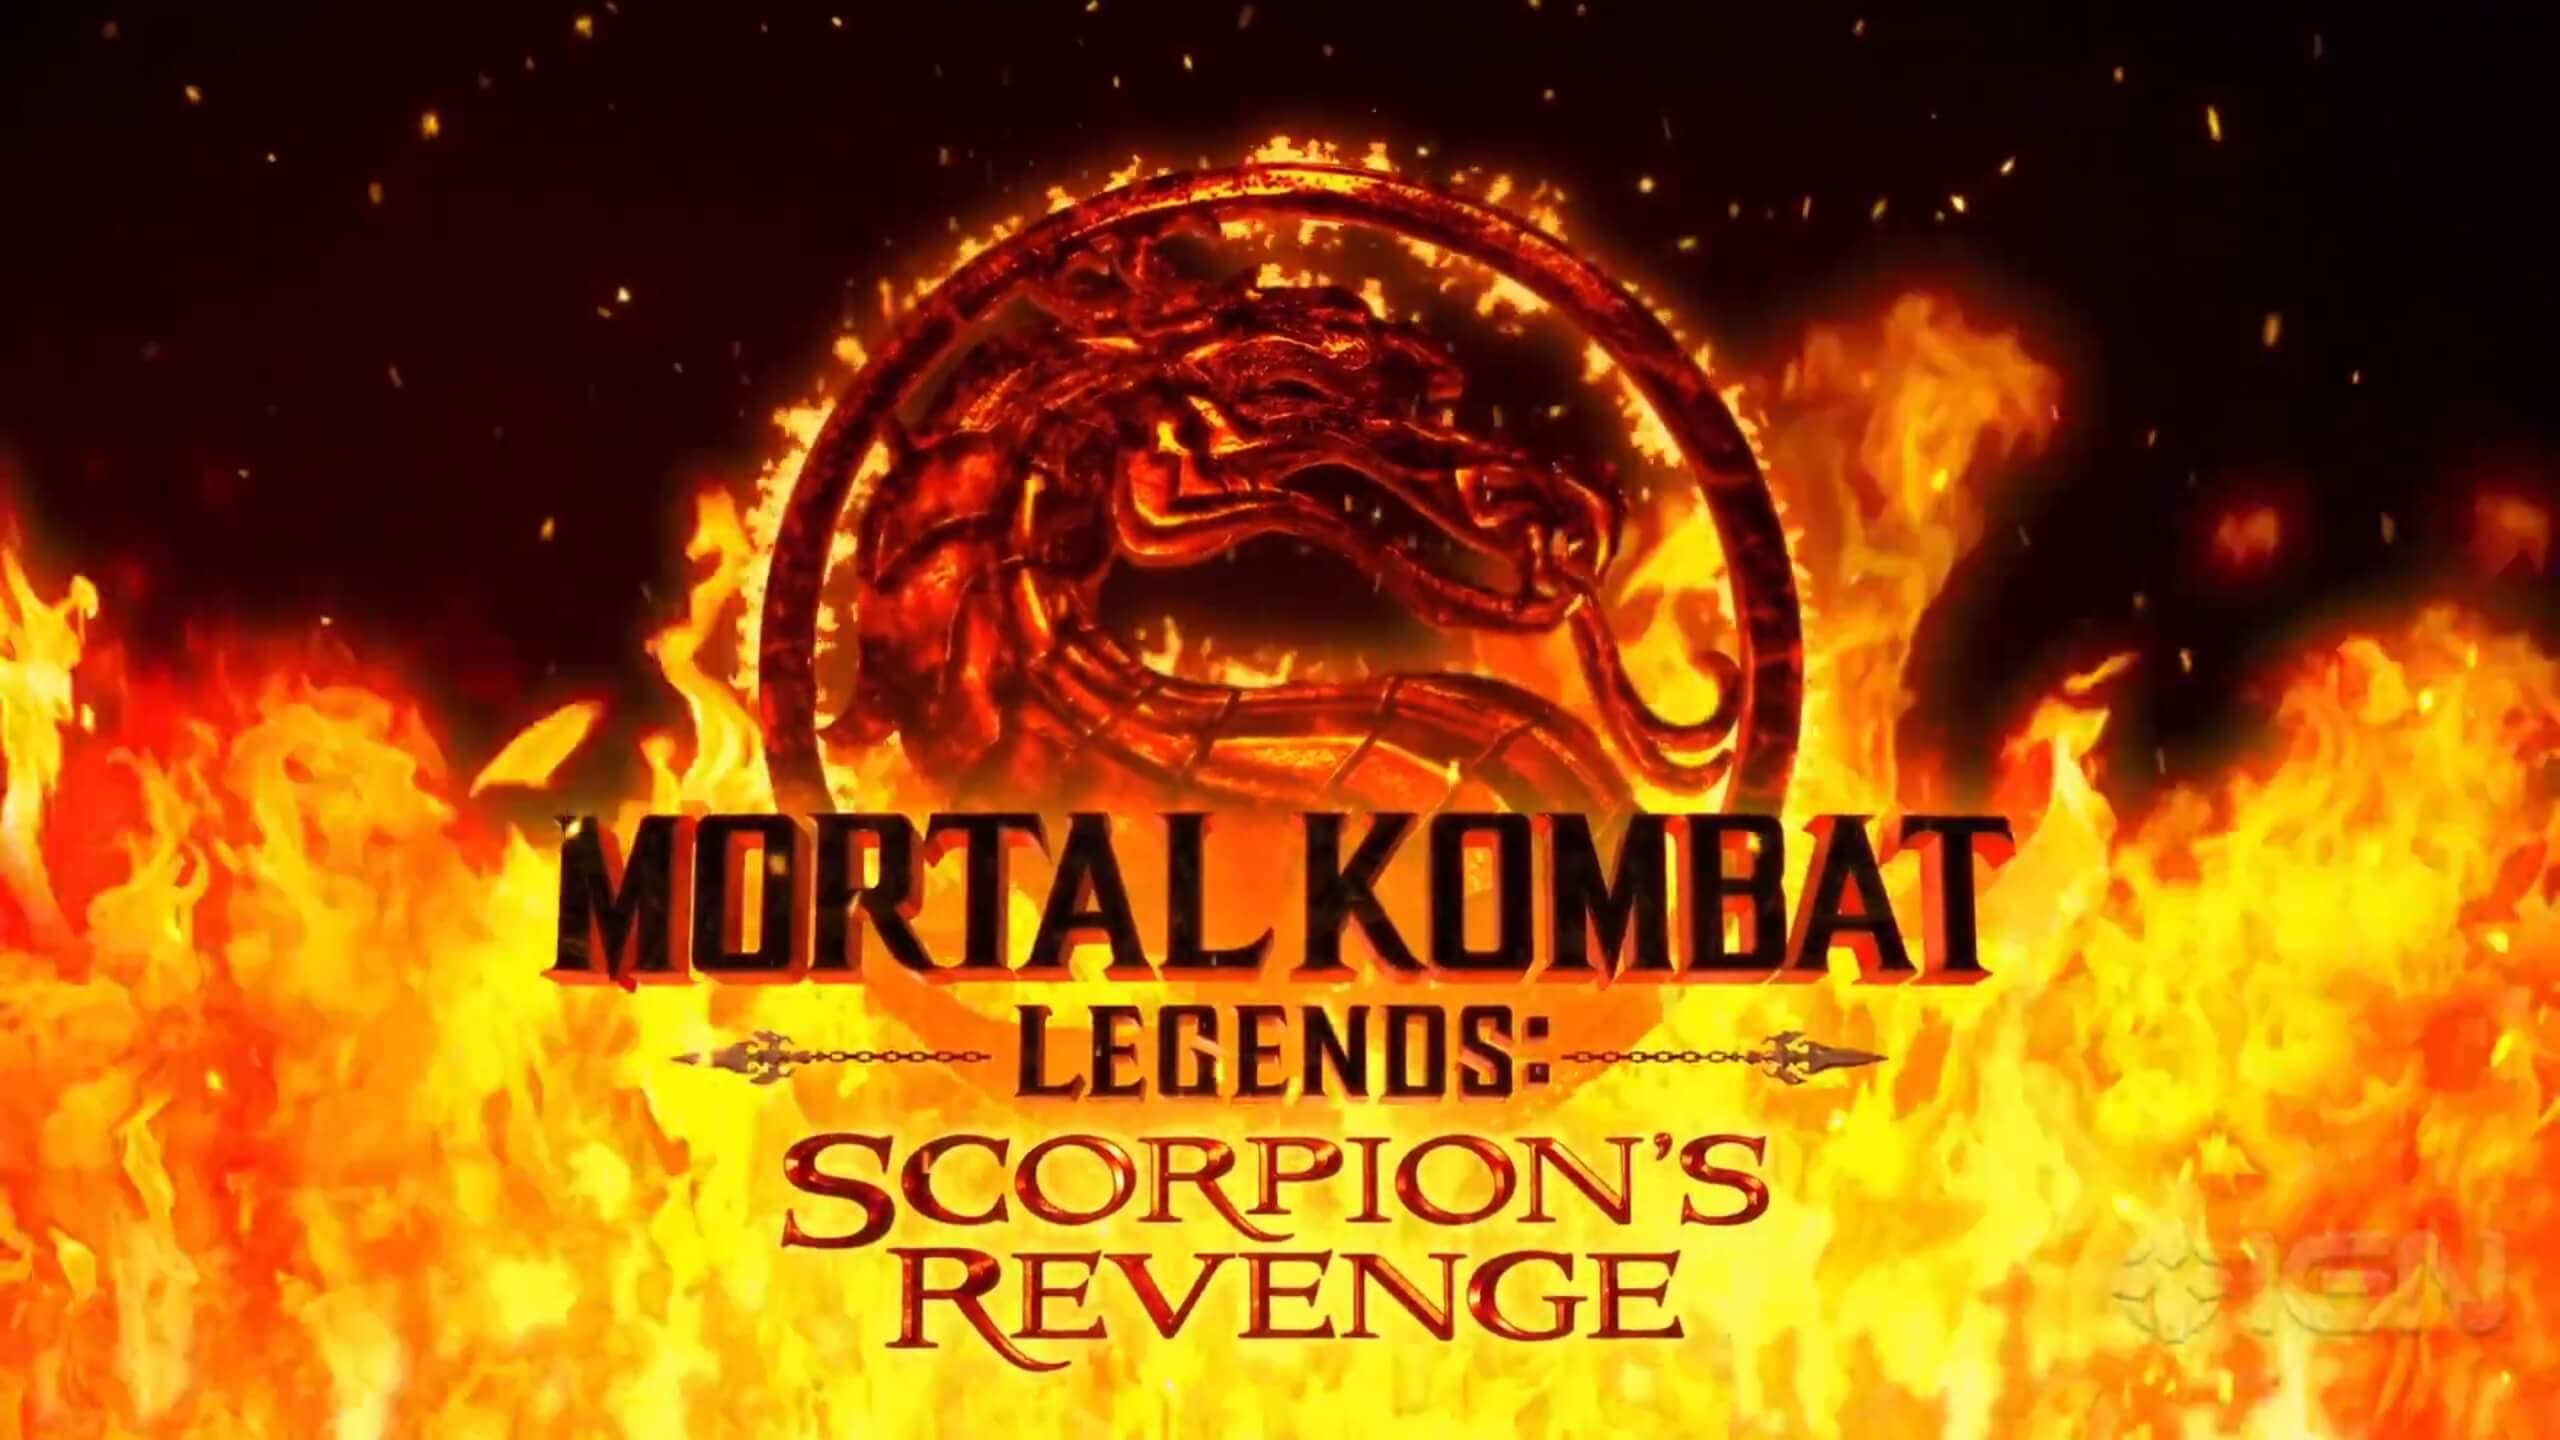 Scorpions Revenge Mortal Kombat Legends Wallpapers